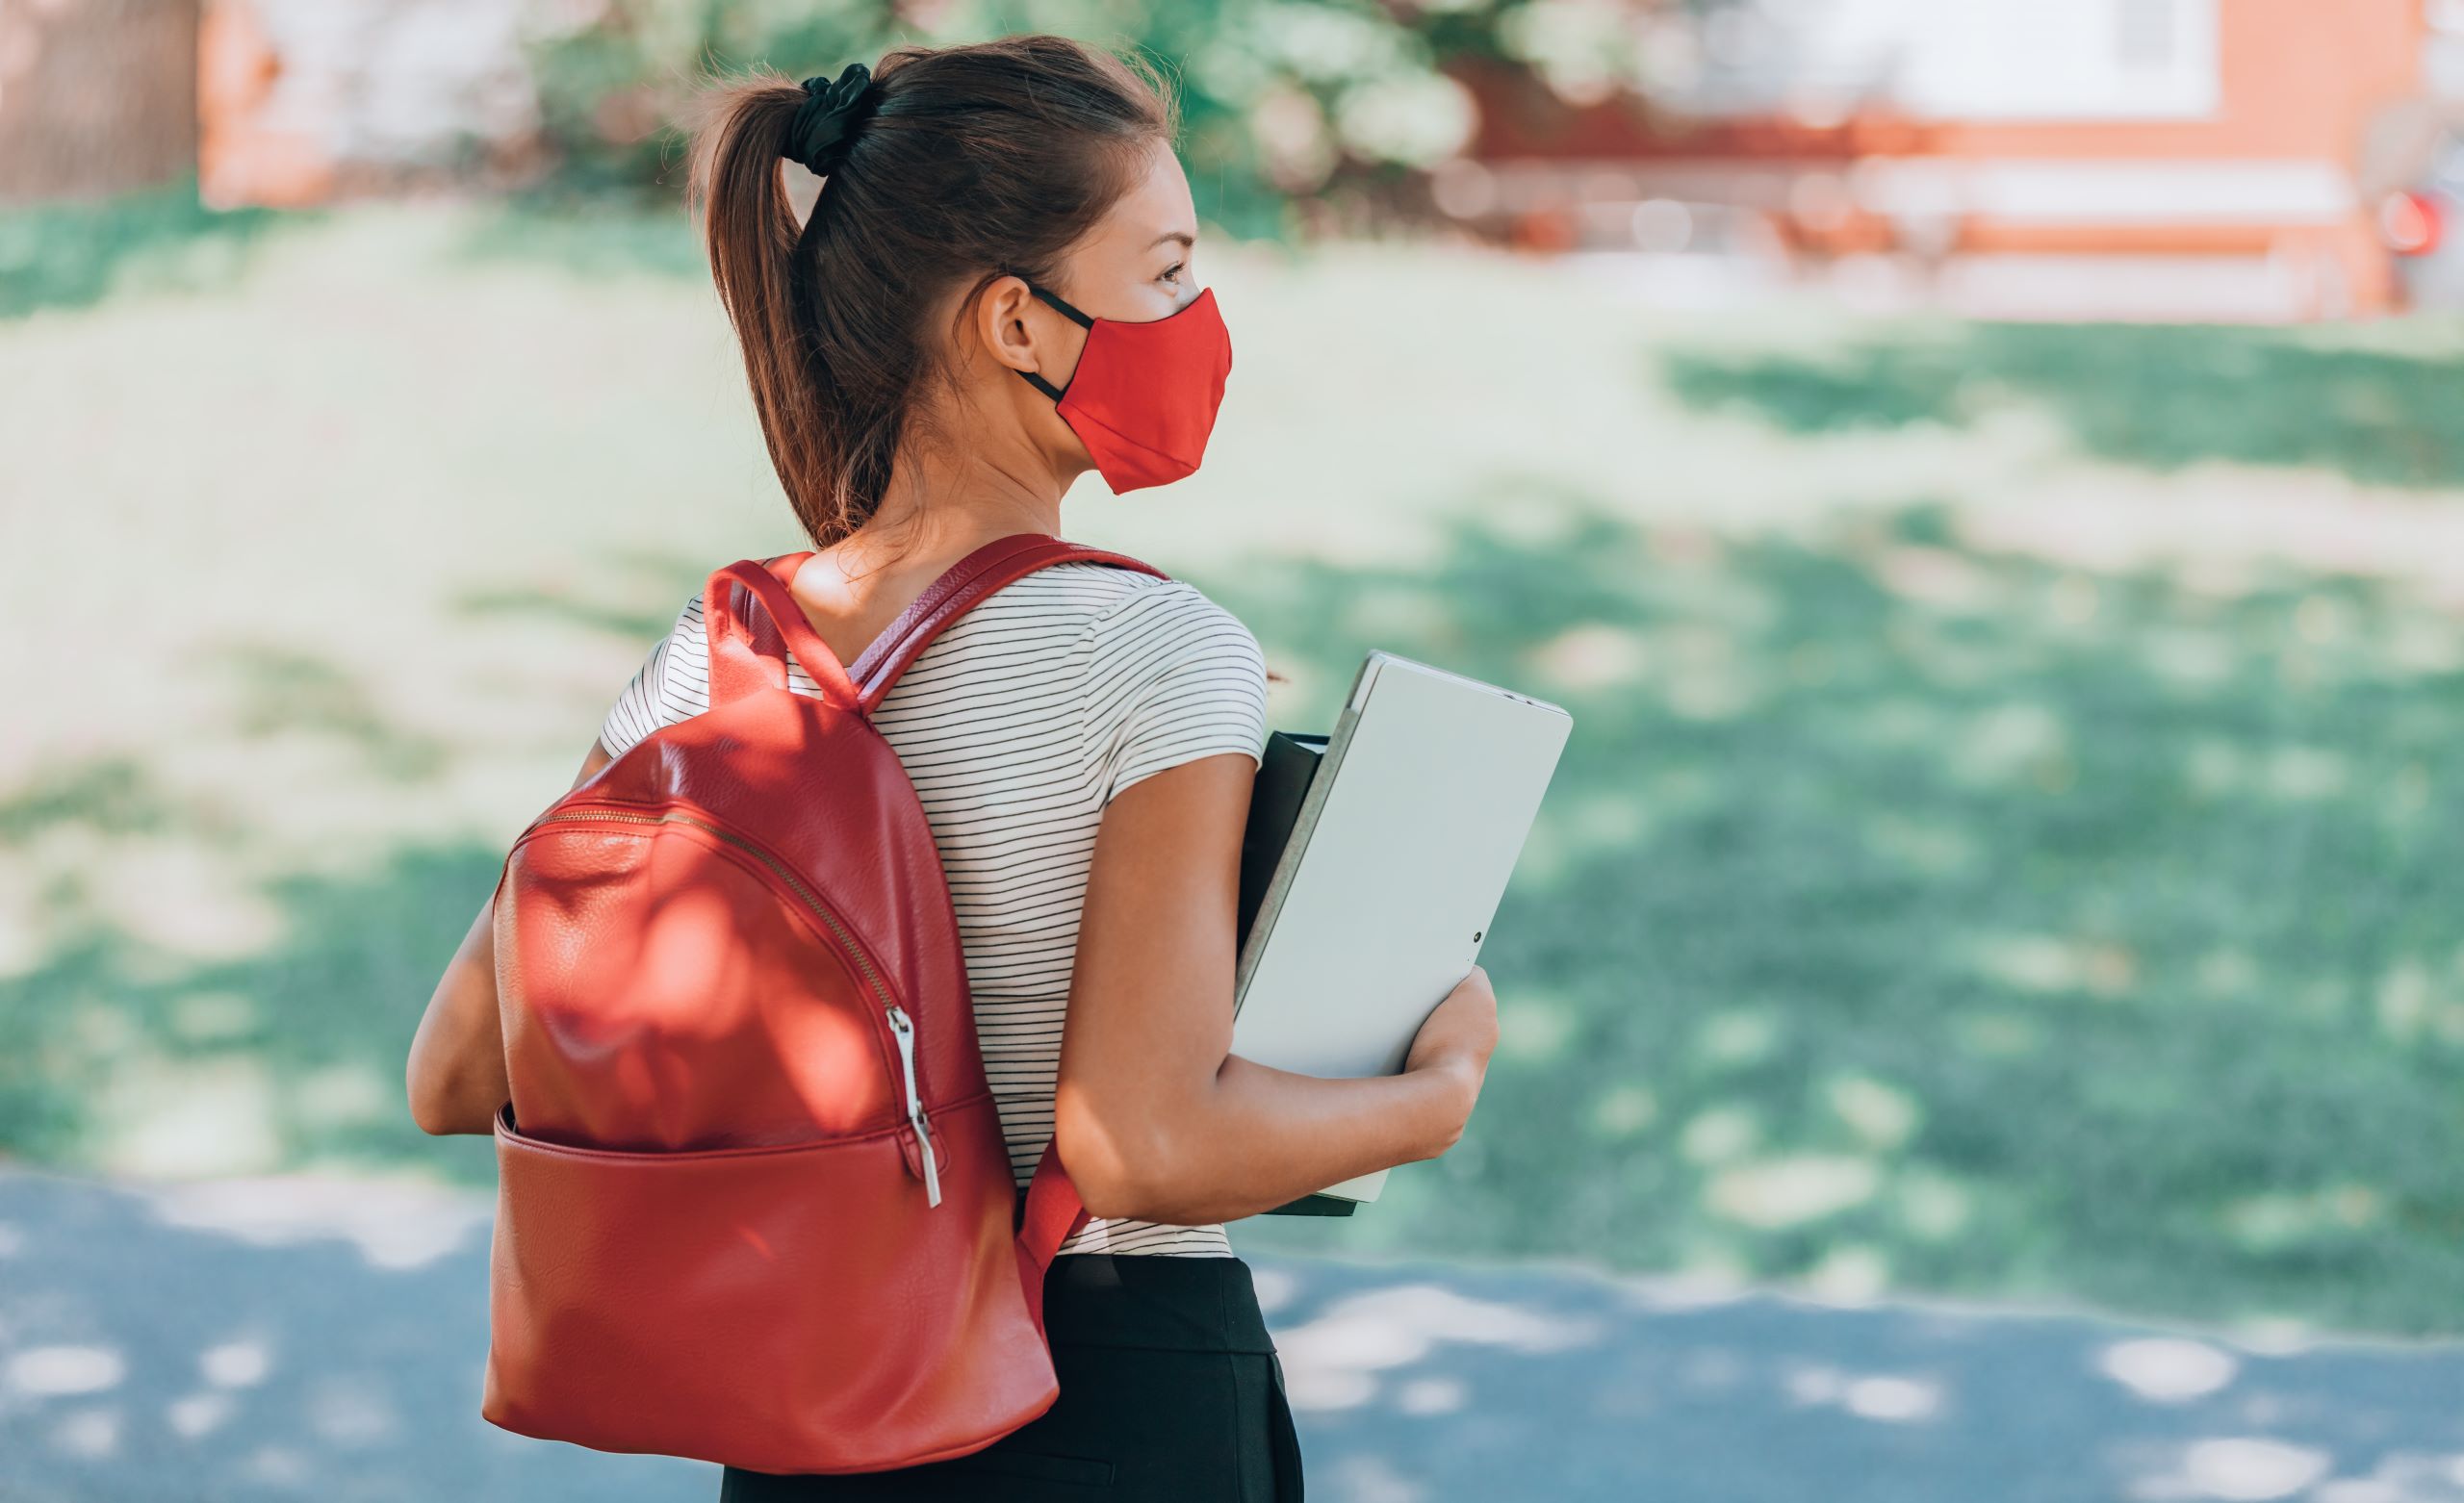 university student wearing backpack holding books